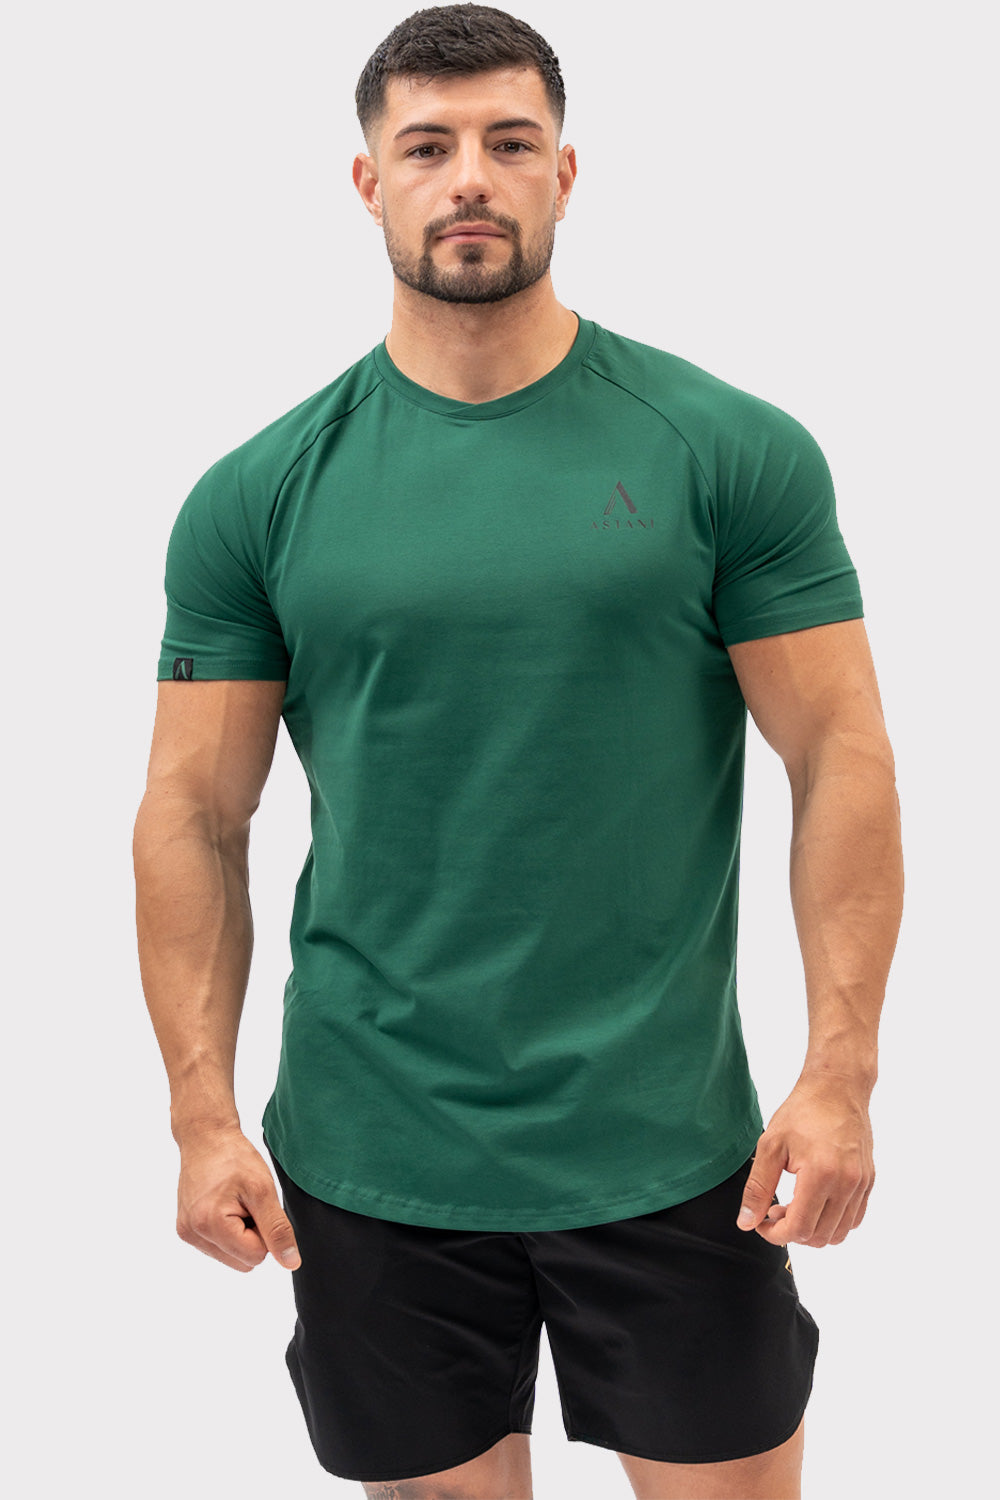 A CODE T-shirt  - Verde Scuro